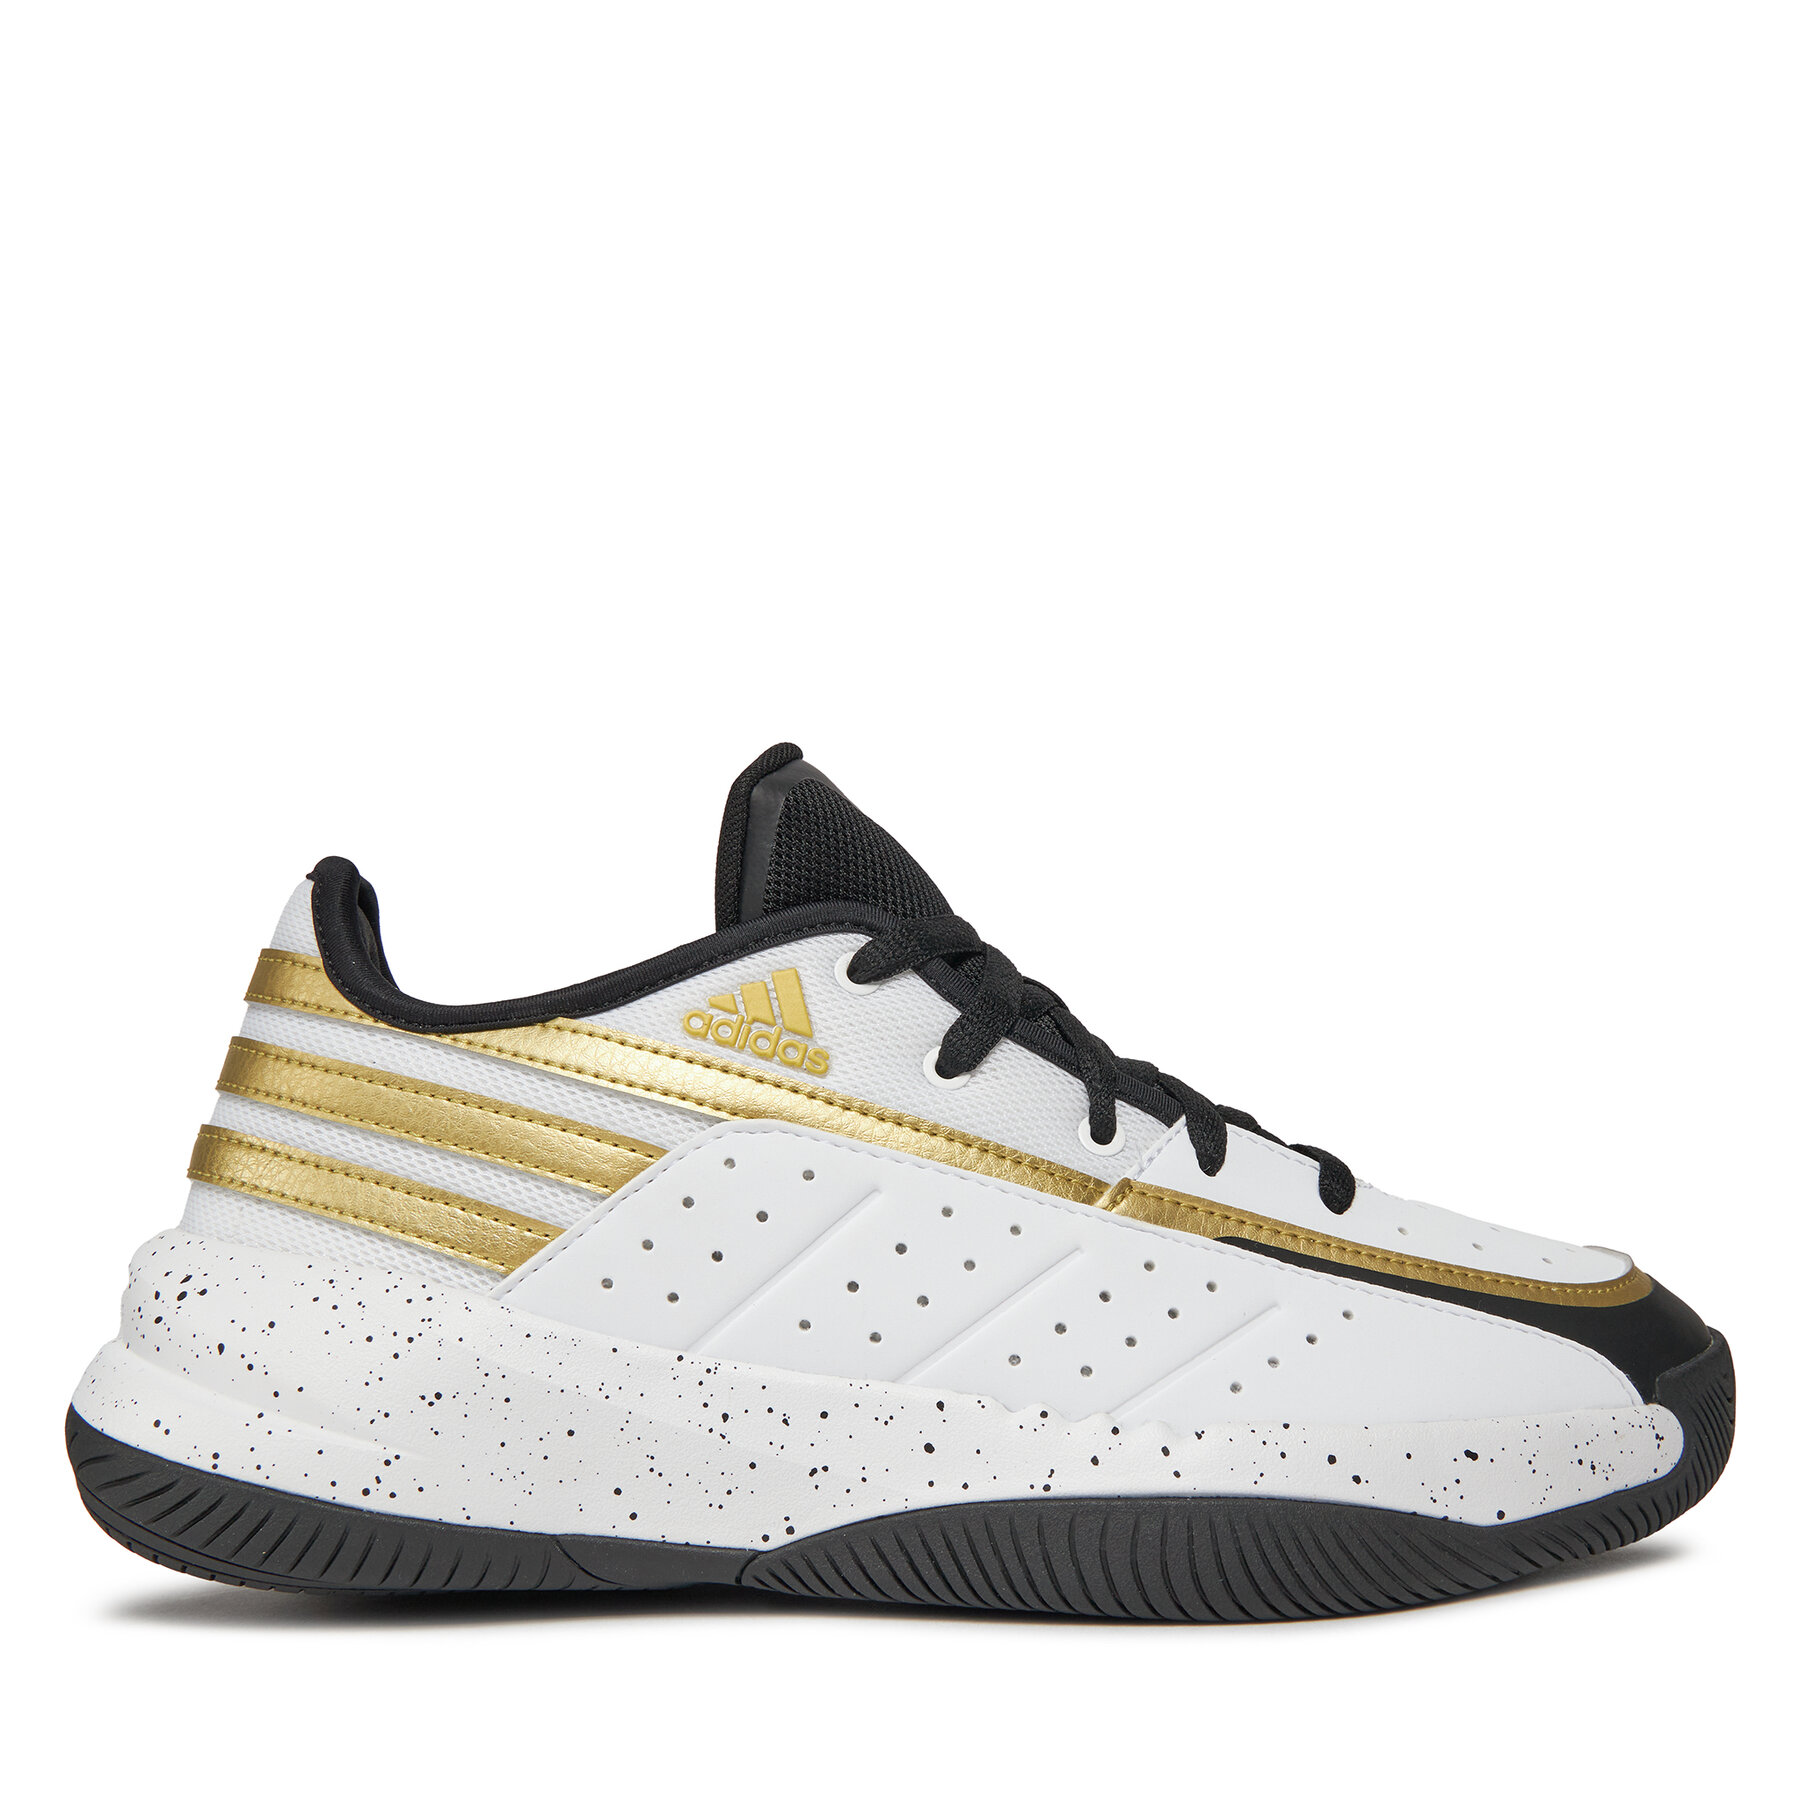 Adidas Front Court cloud white/core black/gold metallic - Zapatillas de baloncesto